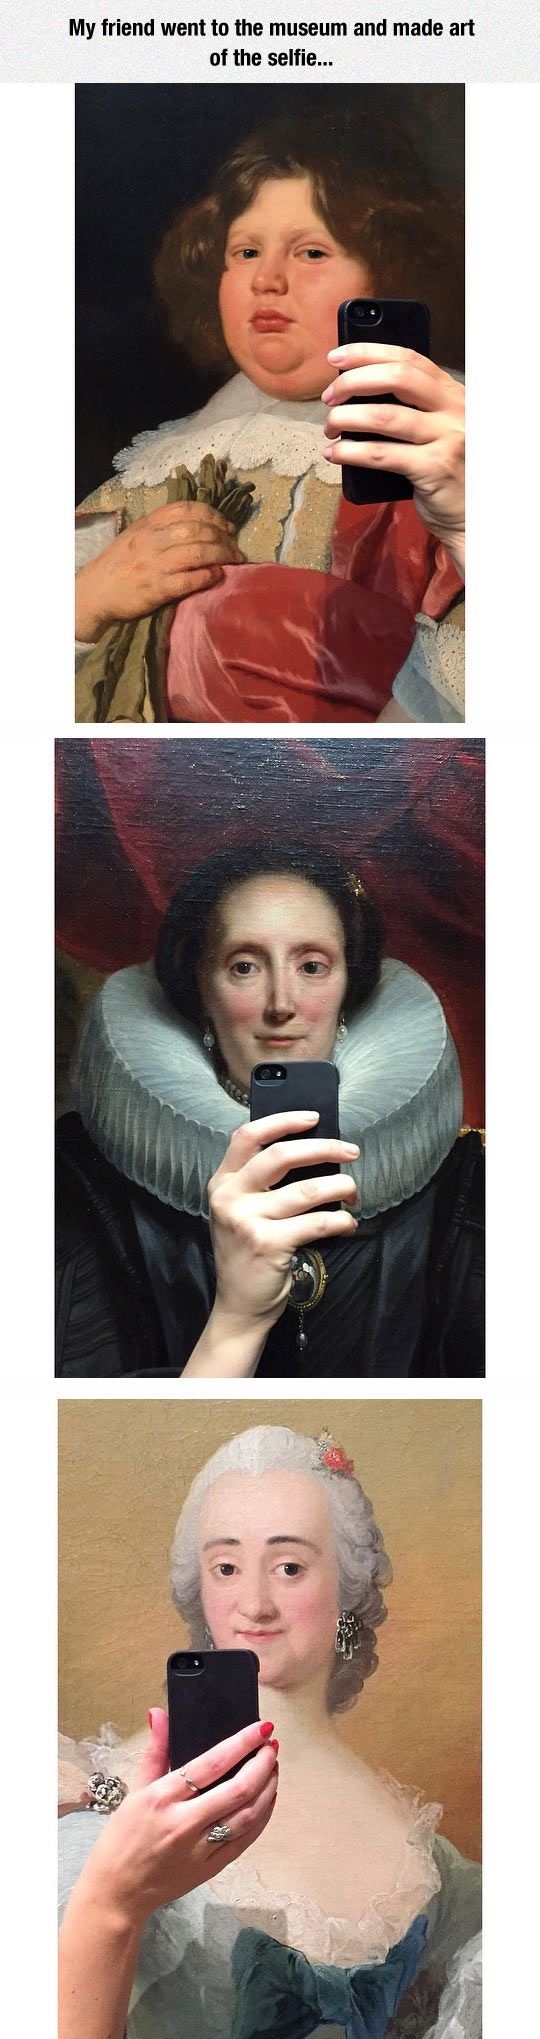 my friend turns art to selfie art.. - meme